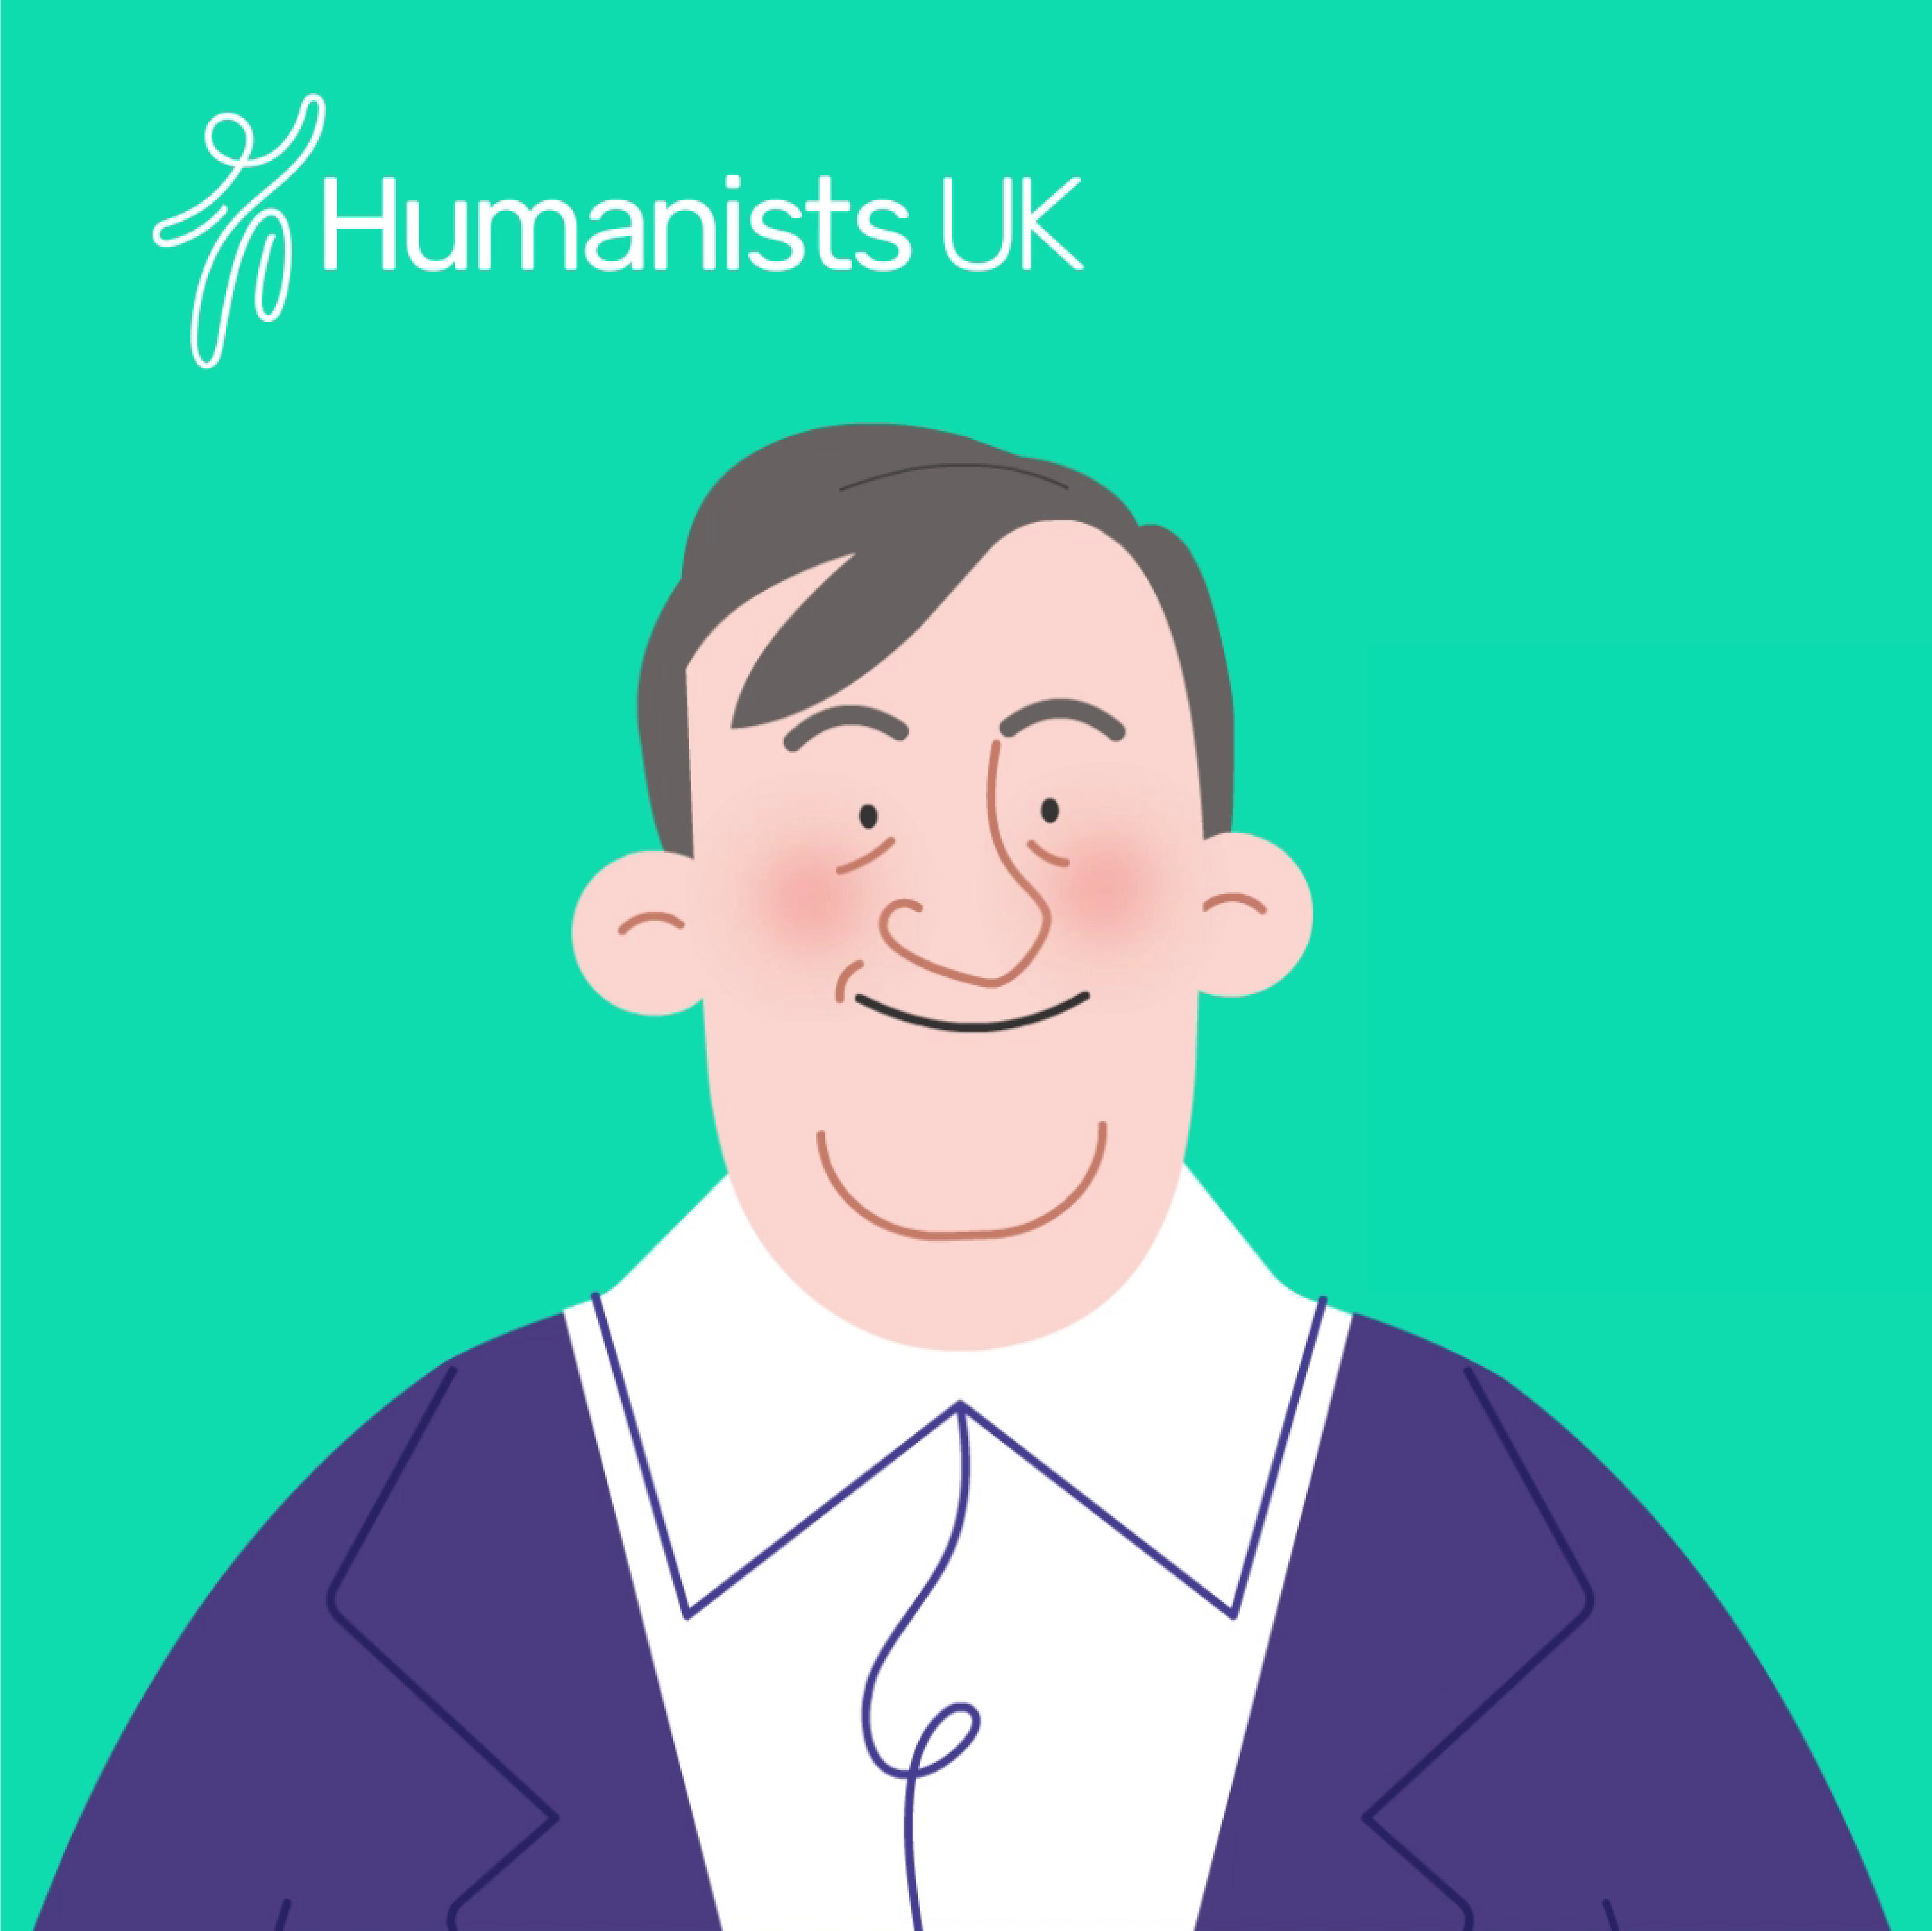 Humanists UK